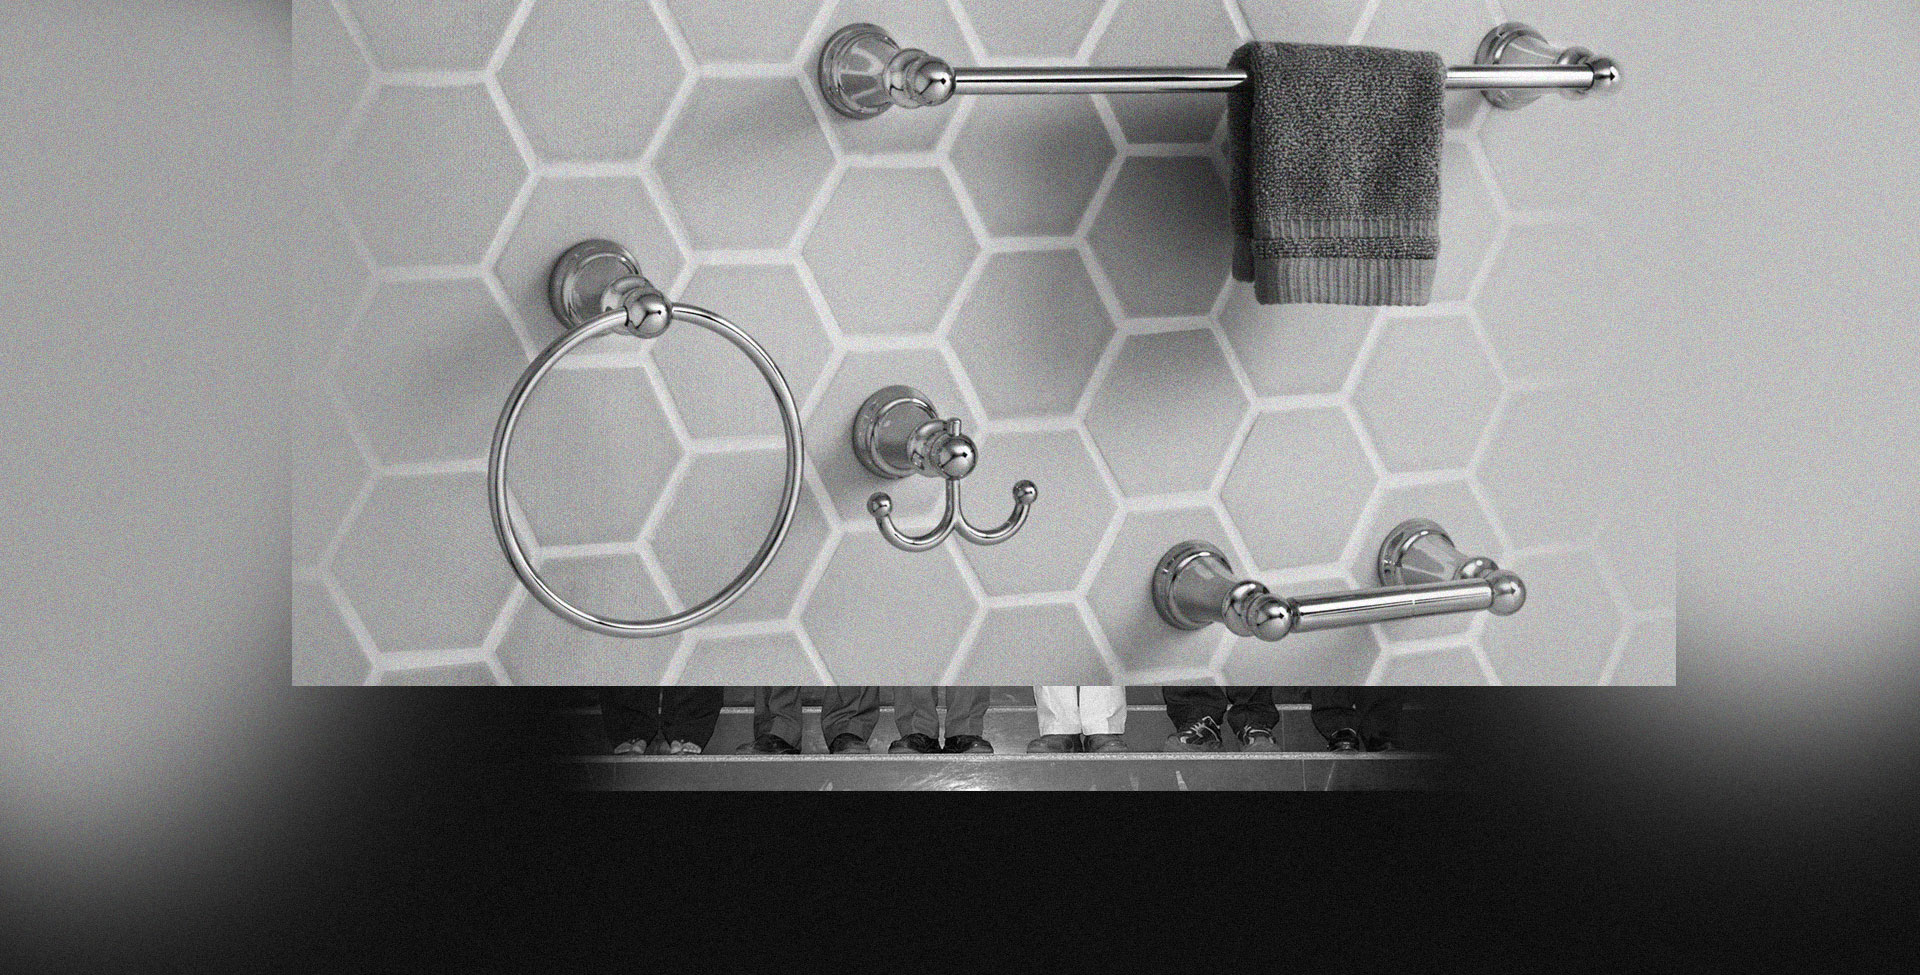 Bathroom accessories ideas